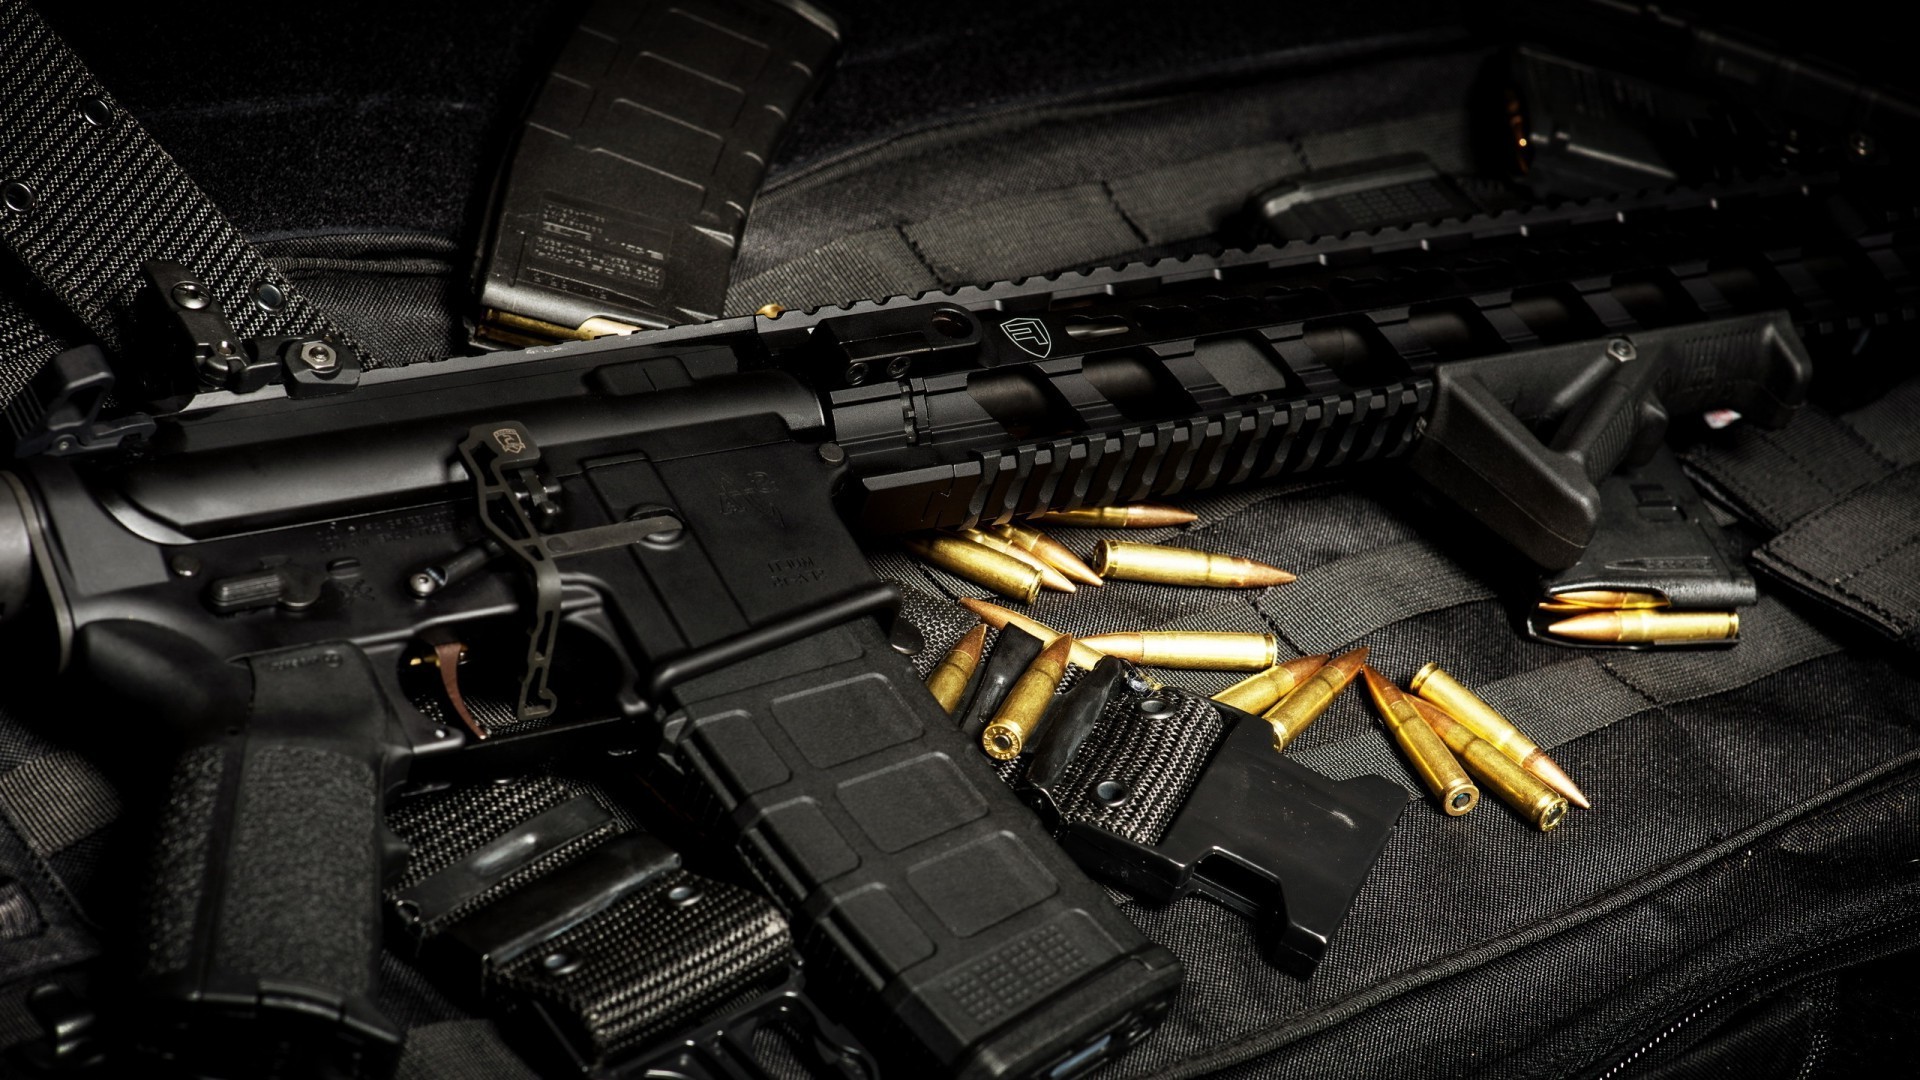 firearms weapon offense gun ammunition pistol bullet police security force war rifle army military danger